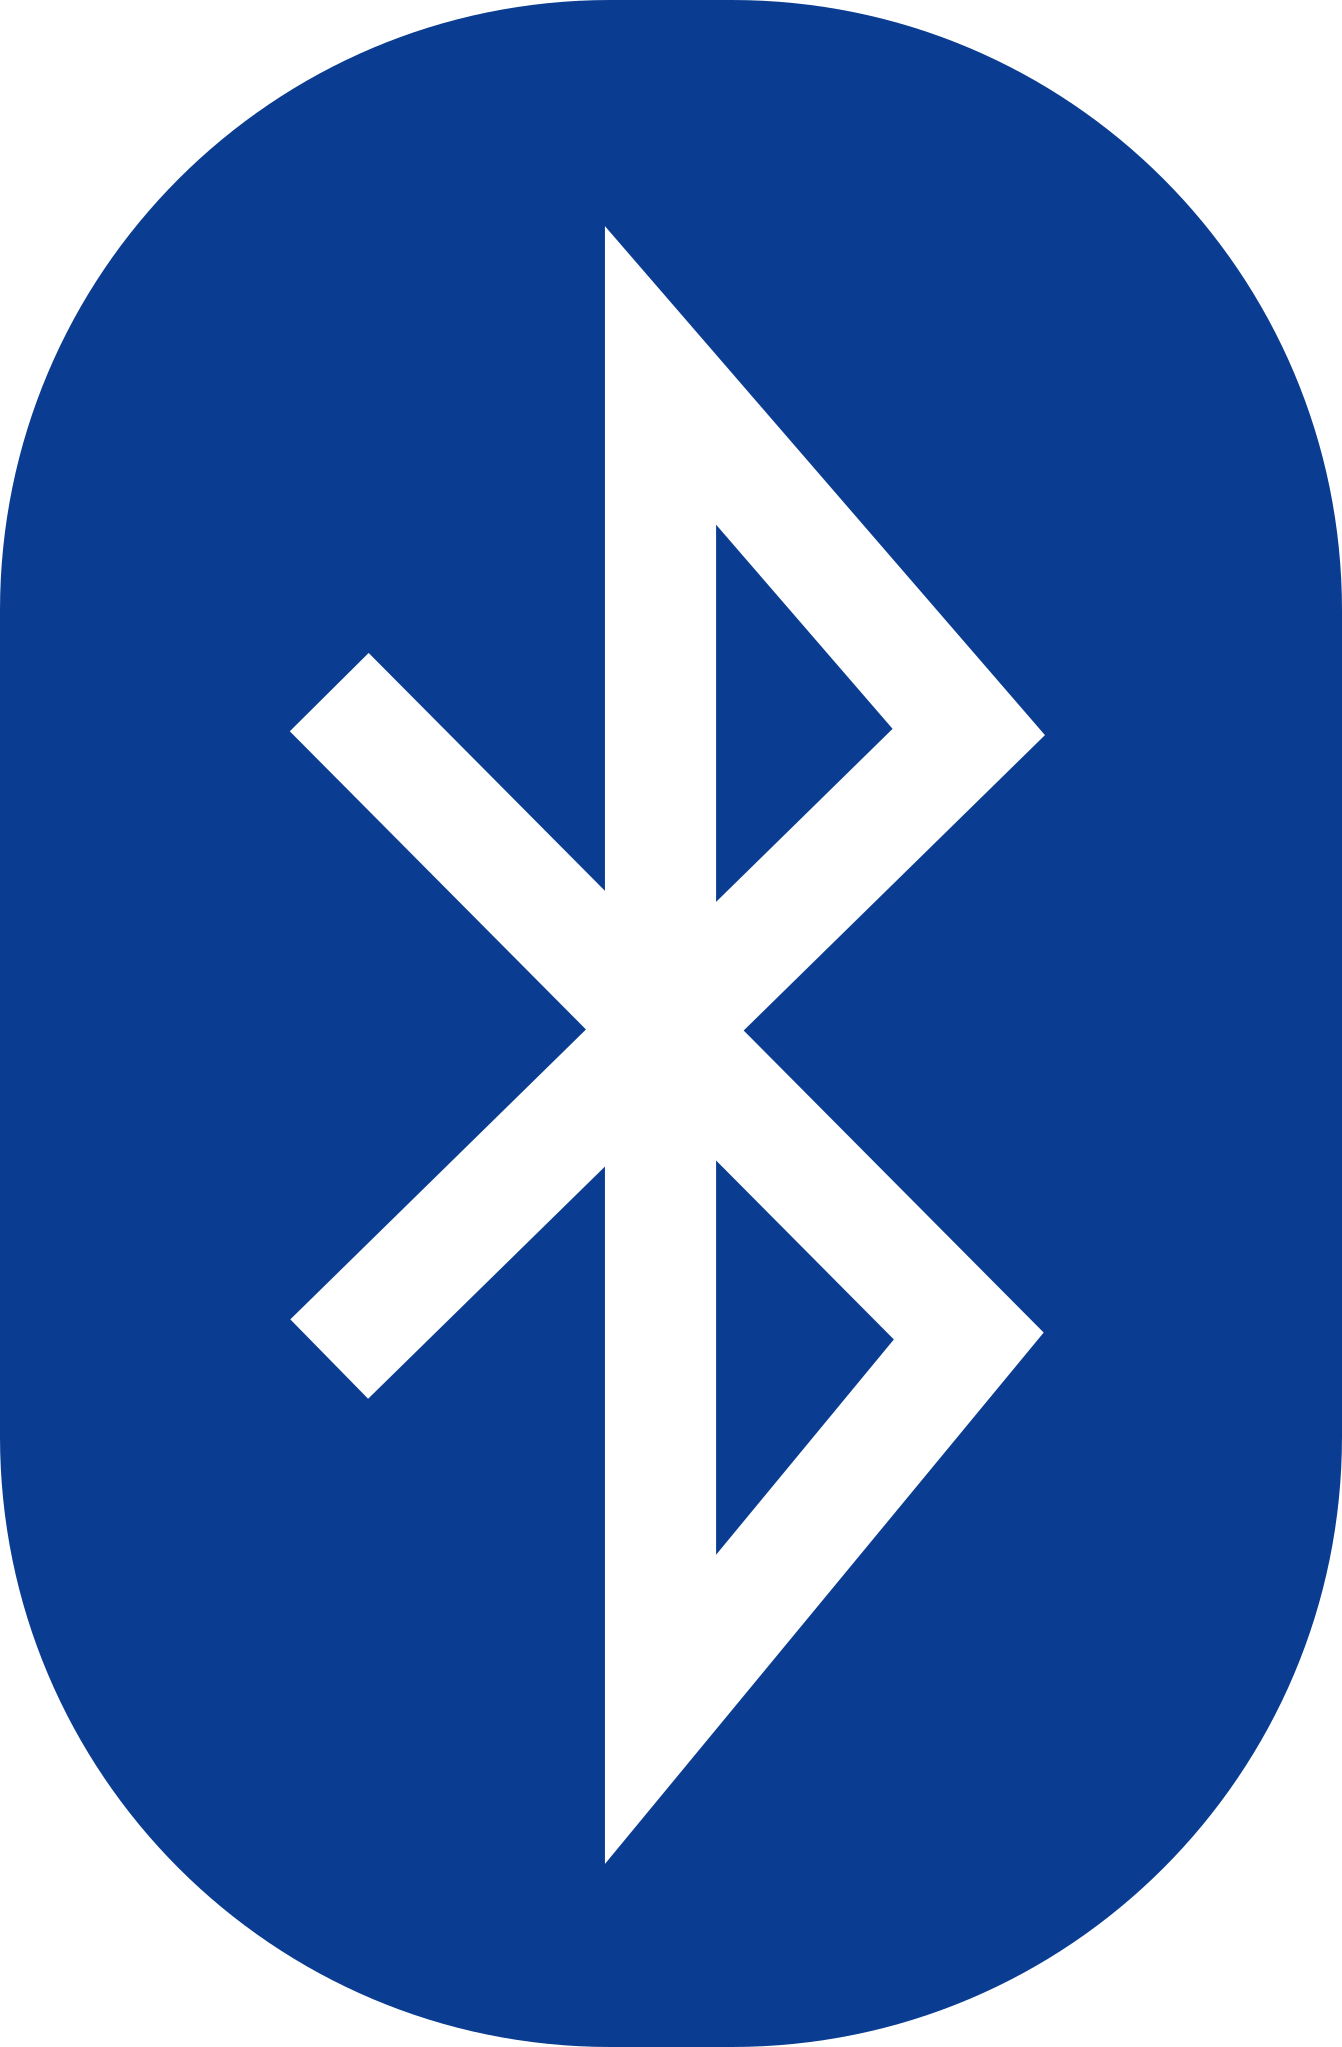 A Bluetooth icon.